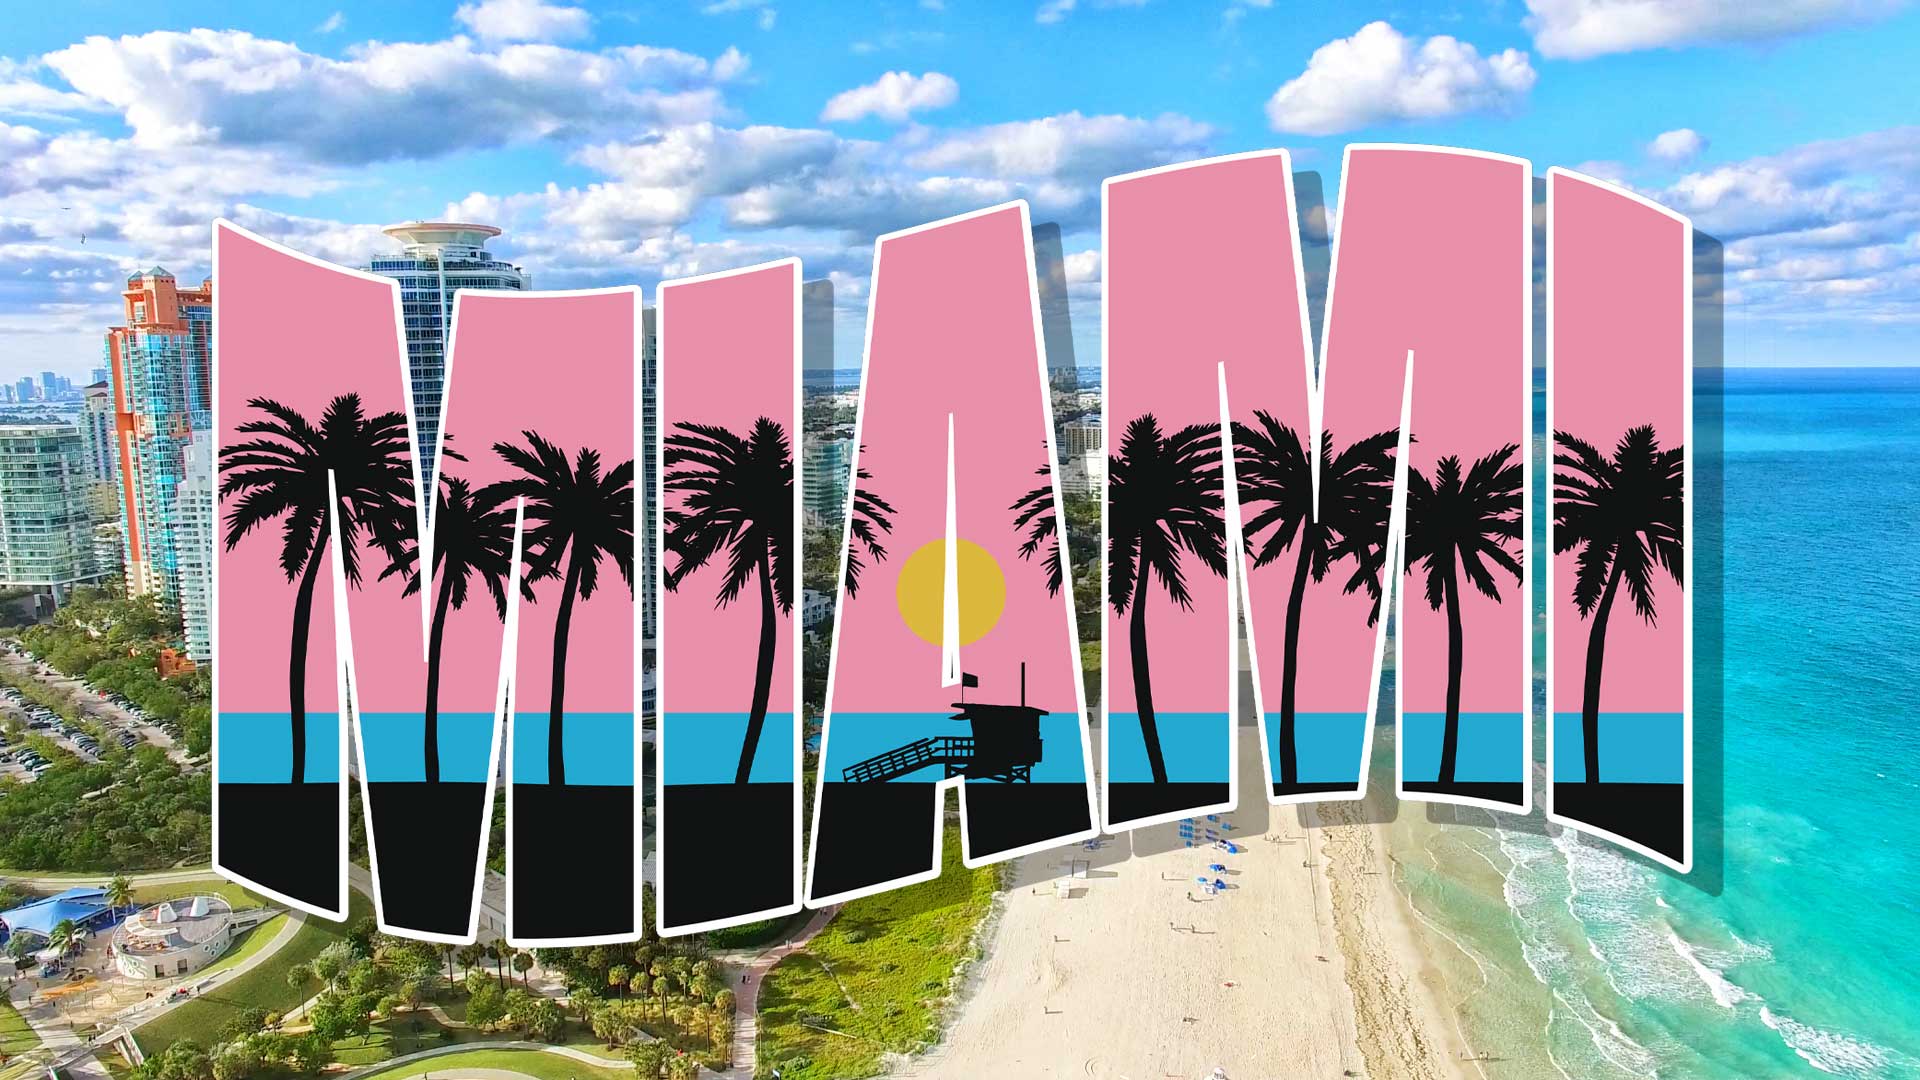 A Miami themed postcard